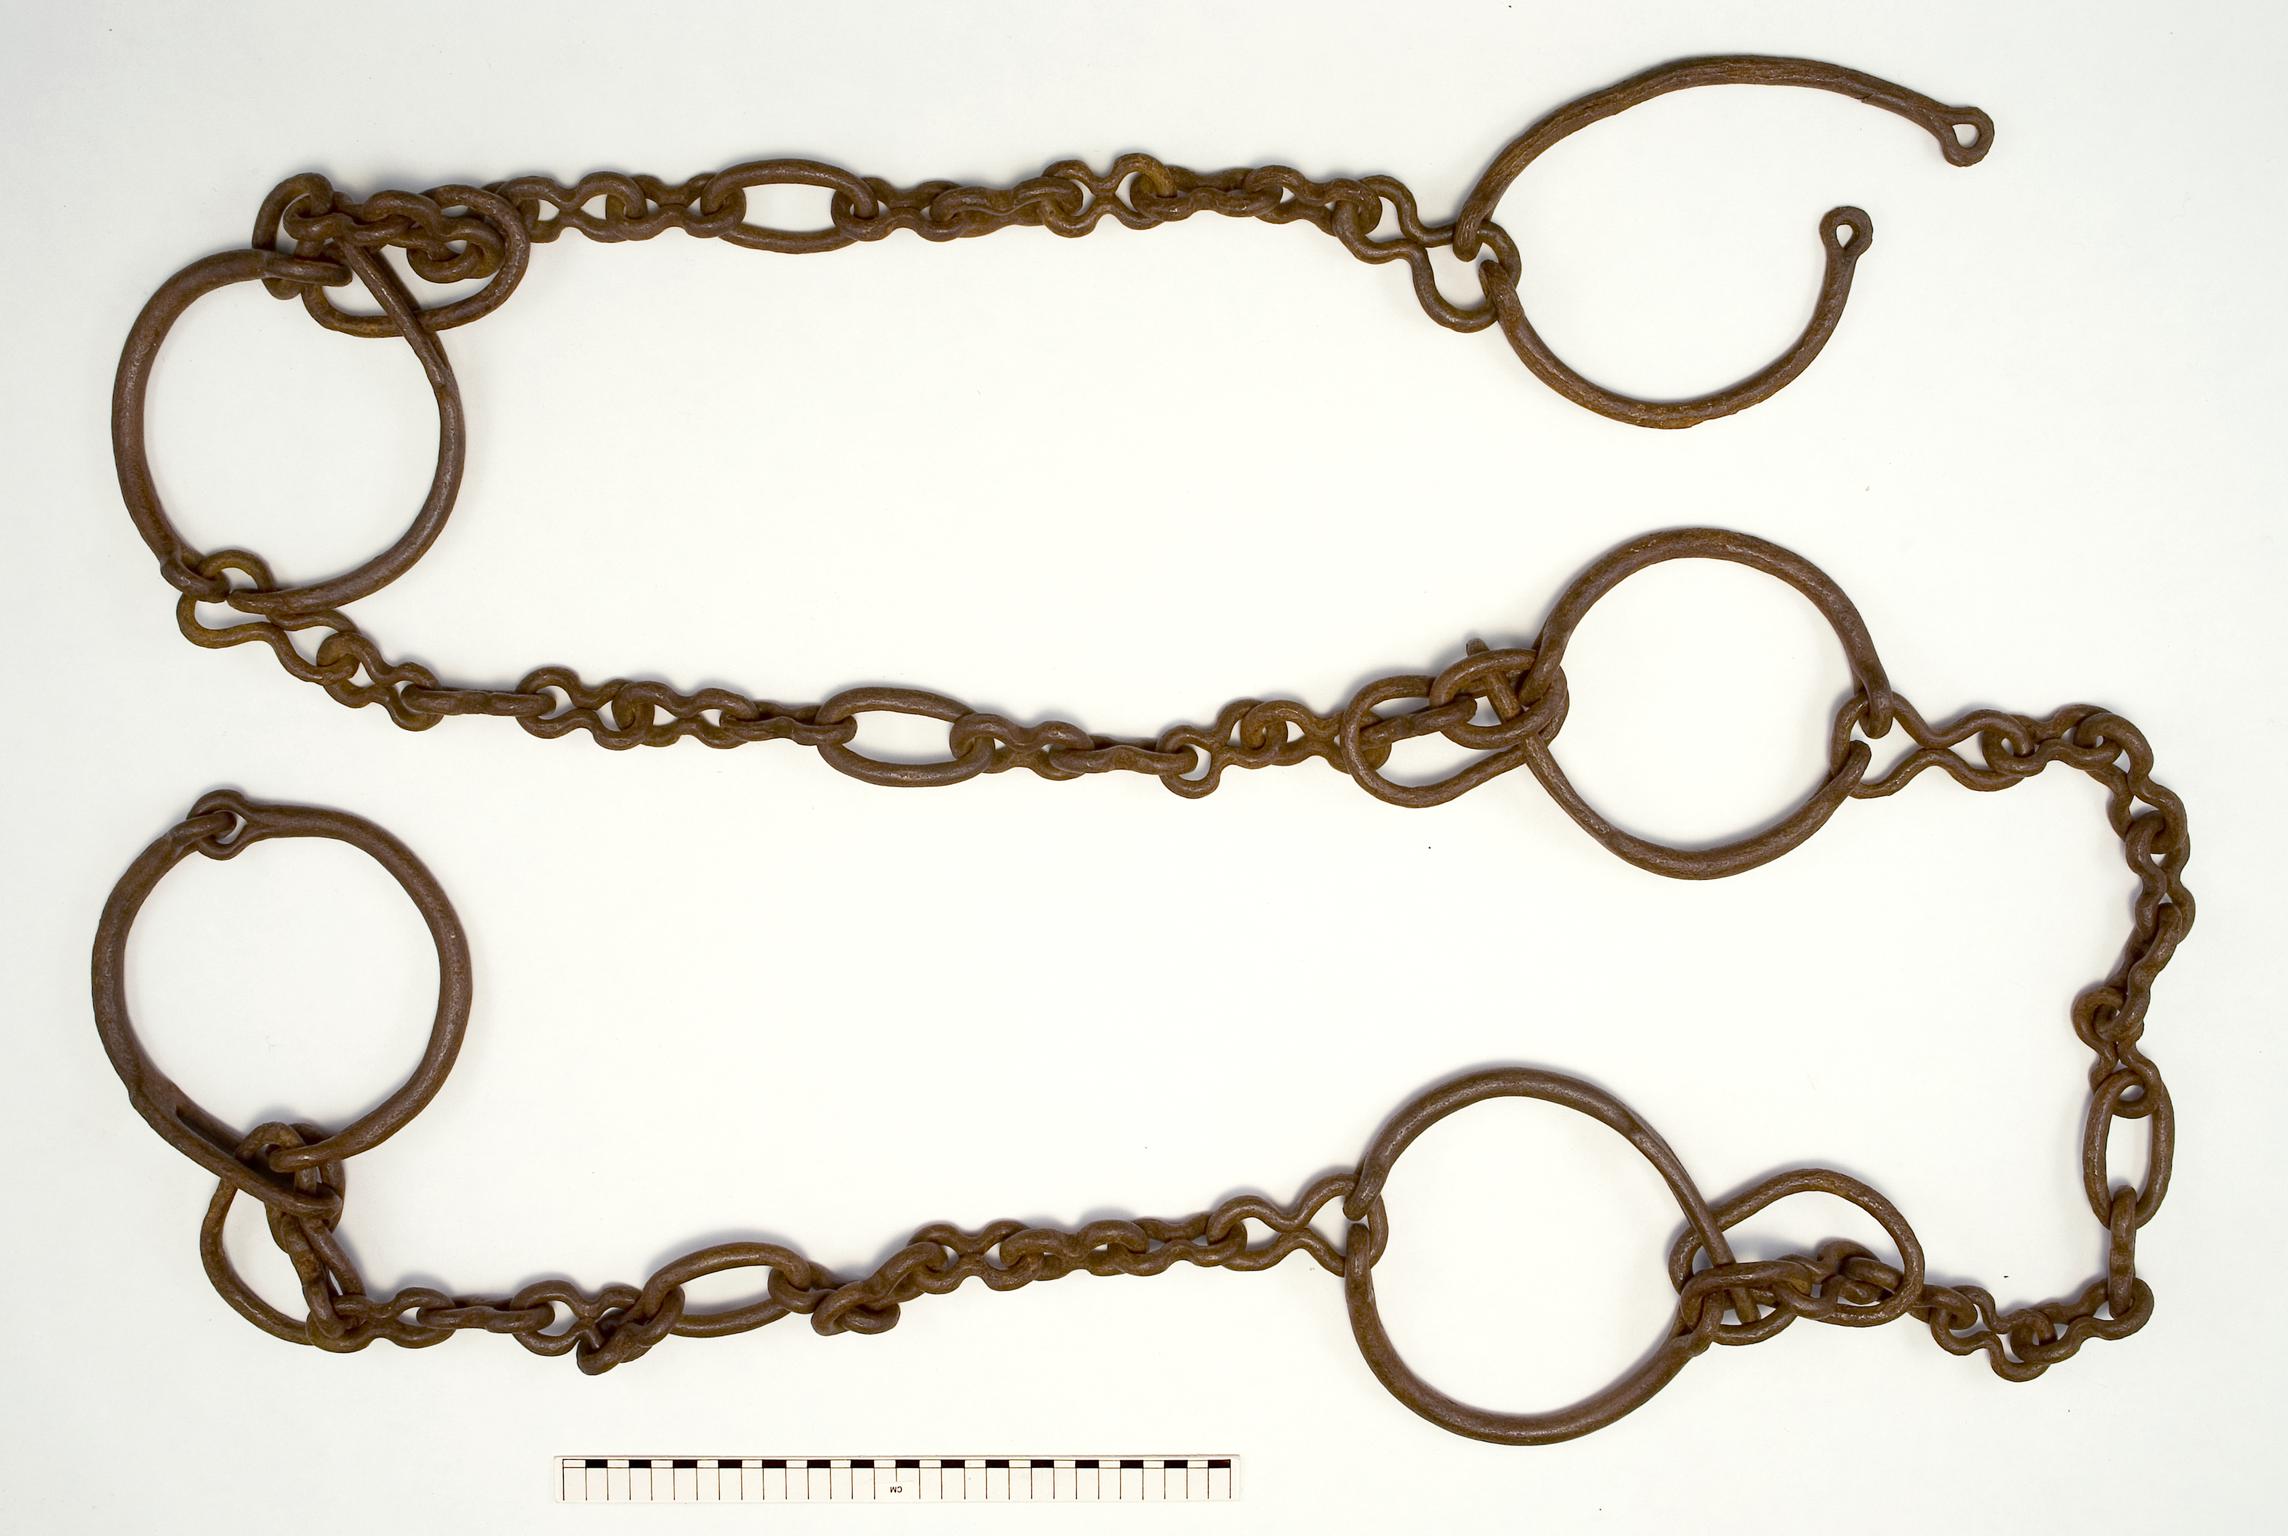 Iron Age iron gang chain